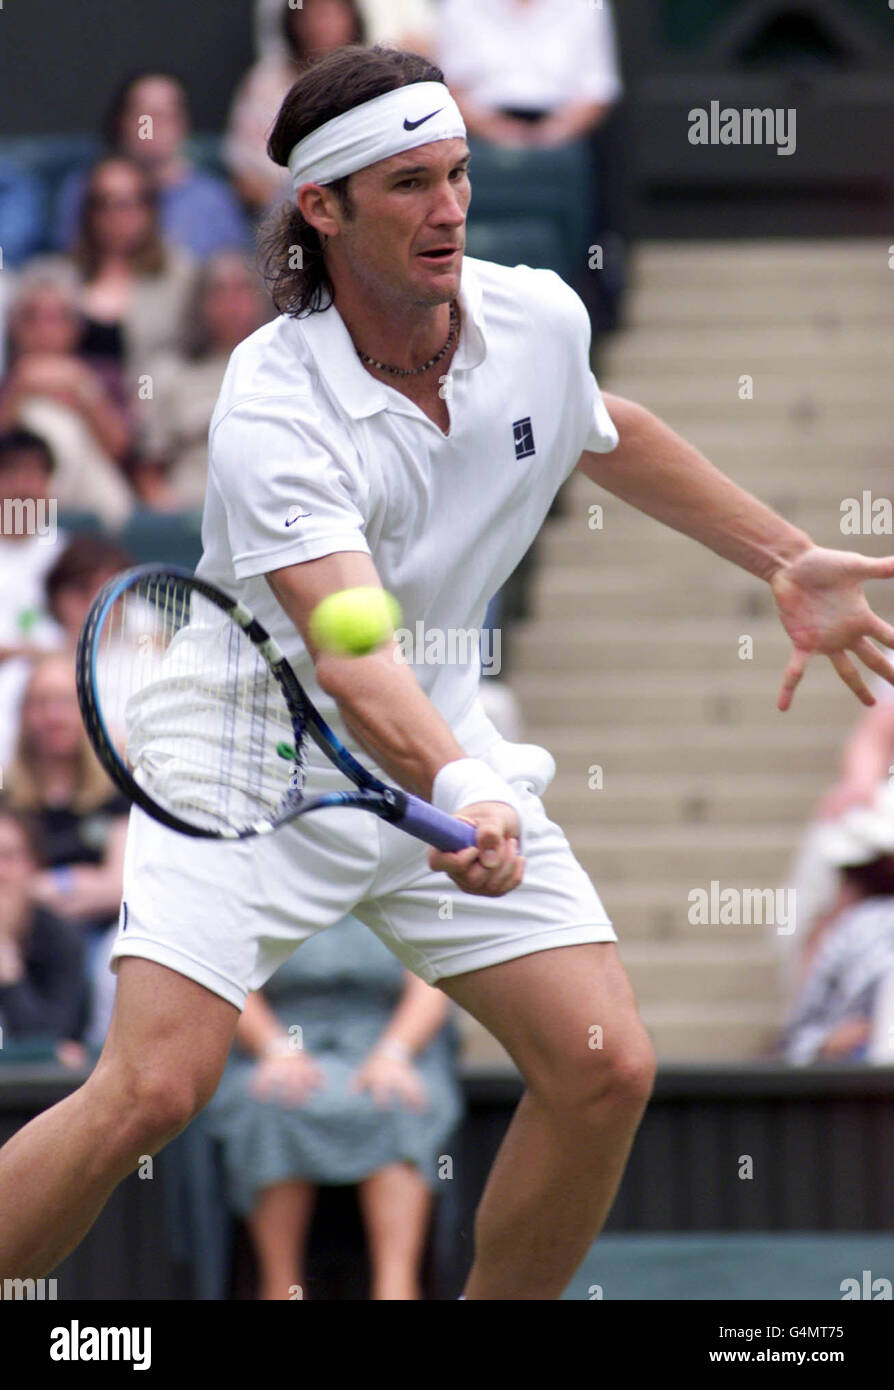 TENNIS Wimbledon/Moya Stock Photo